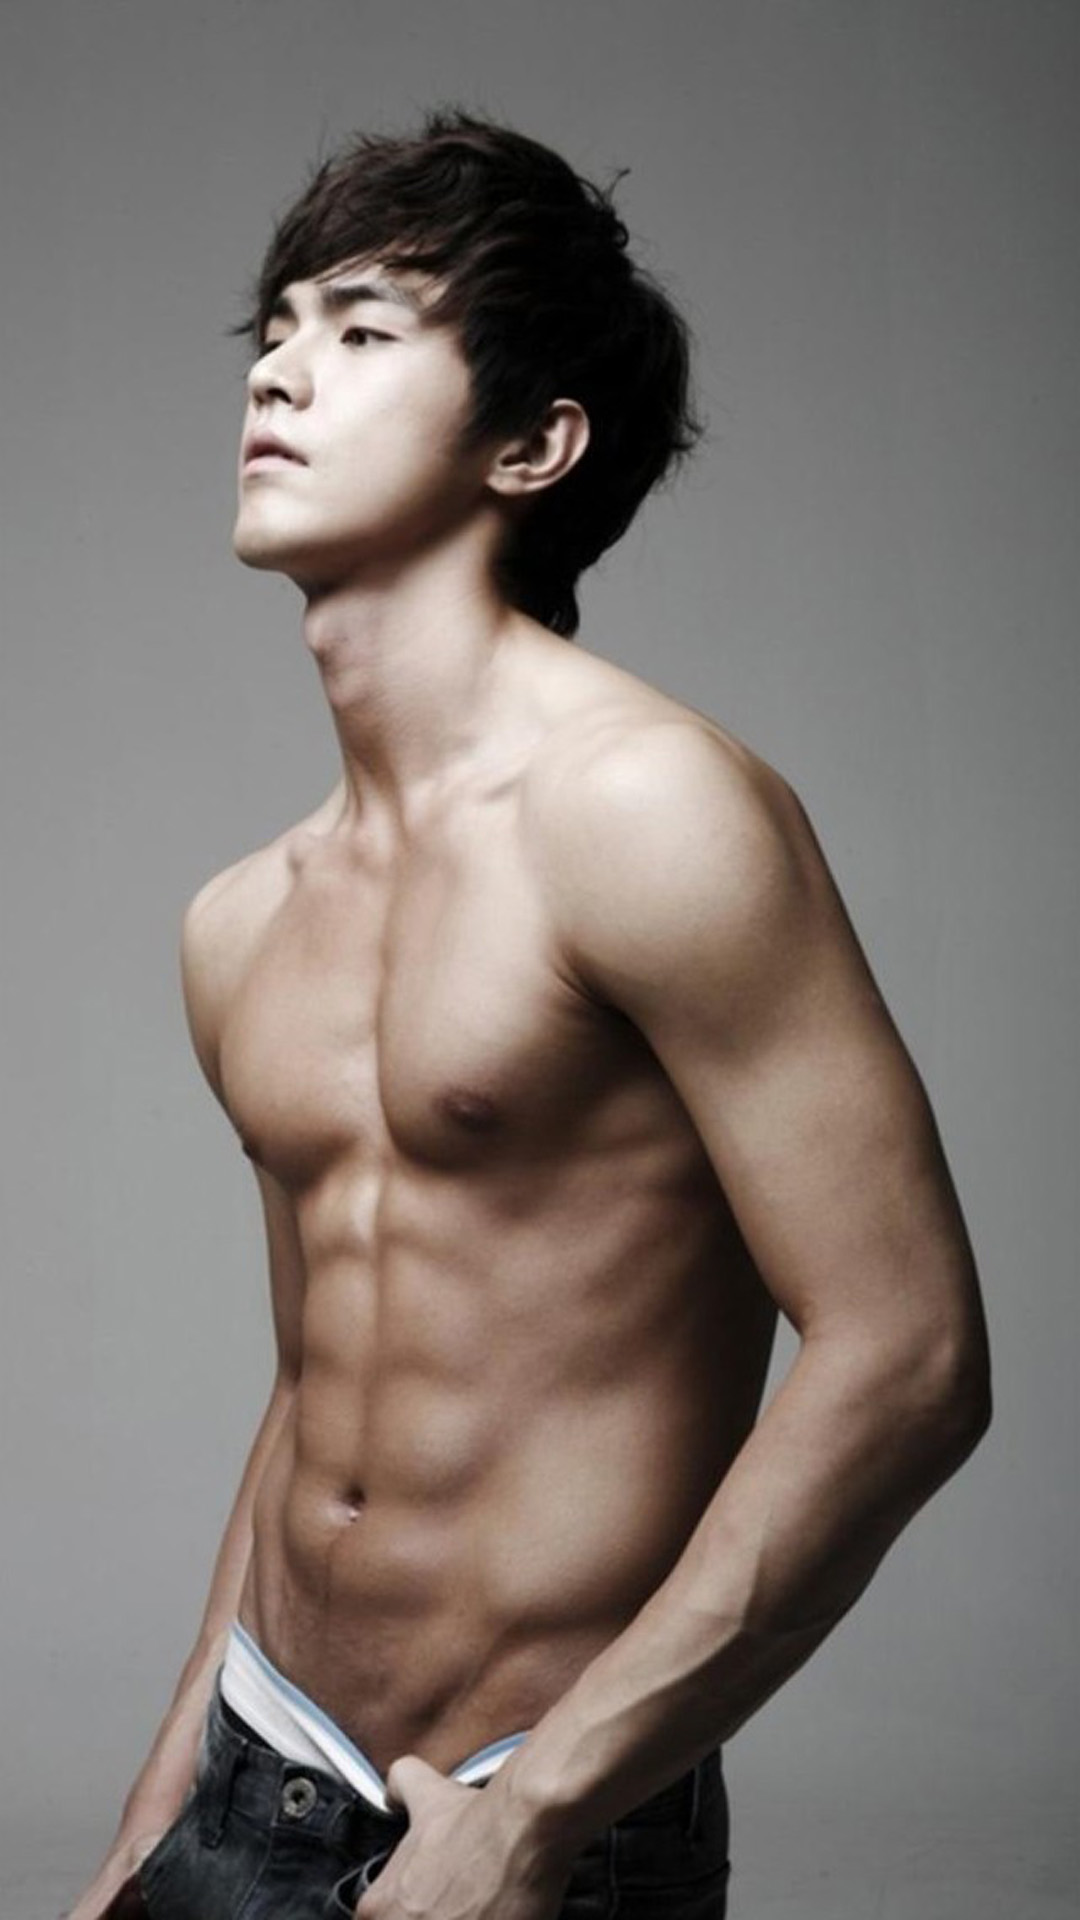 korean boy wallpaper,barechested,abdomen,muscle,bodybuilder,model